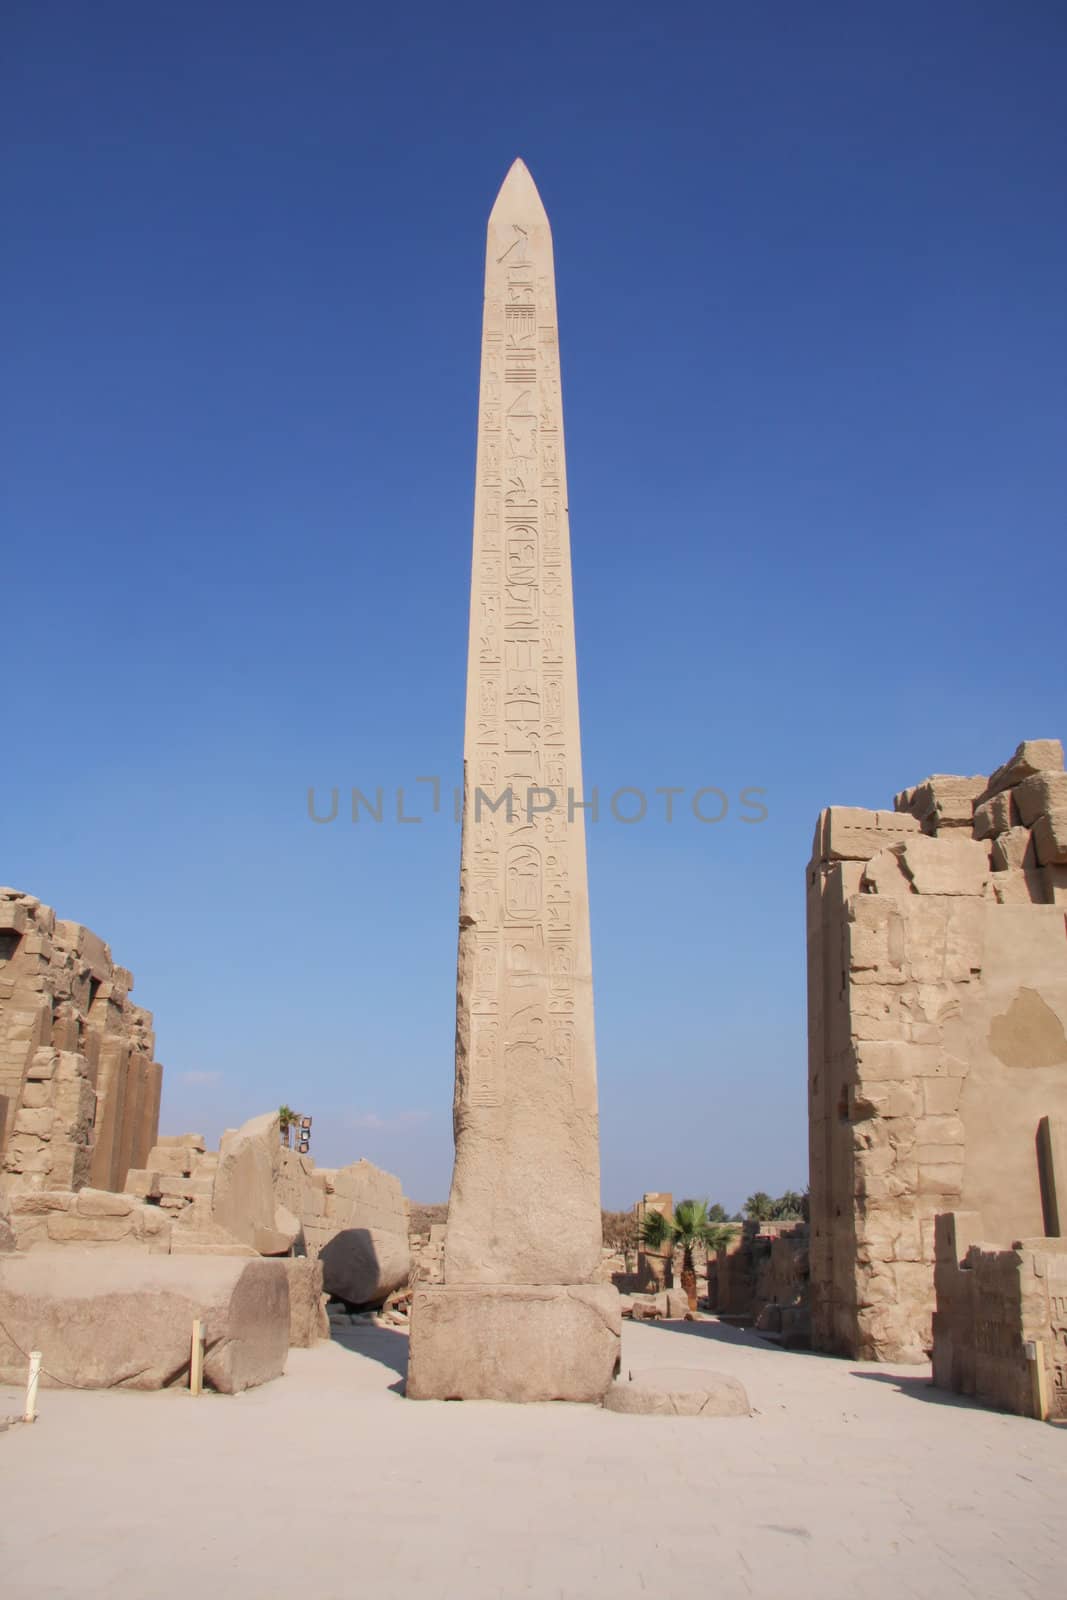 Obelisk Karnak Temple Luxor, Egypt, blue sky and copy space